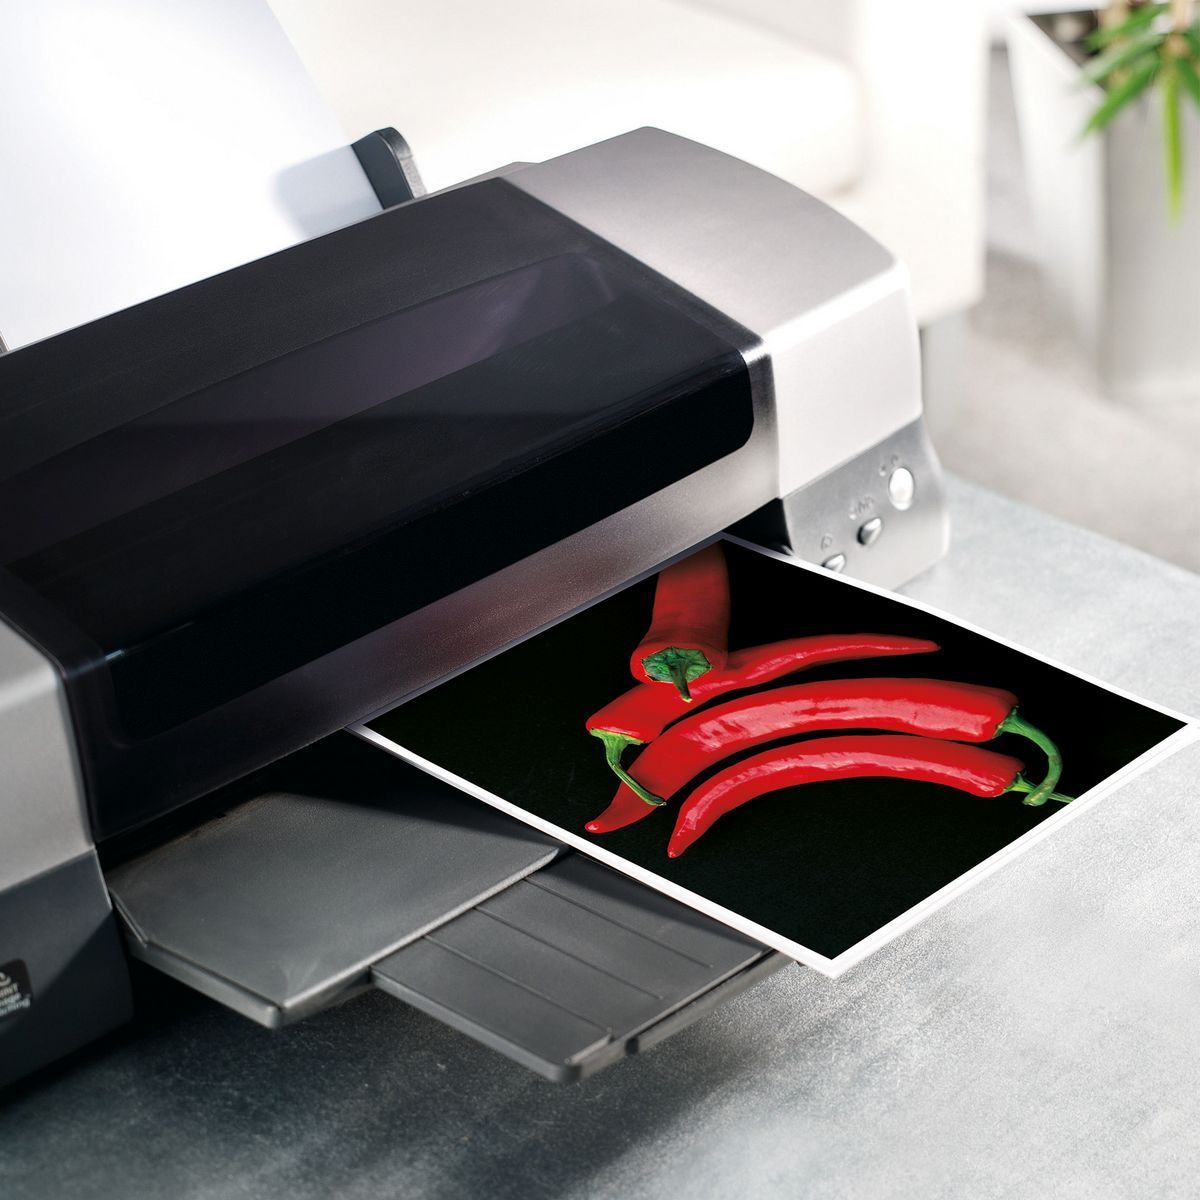 Fotopapier Photo Paper Ultra IP672, DIN A4, weiß, seidenmatt, 260 g/qm, 20 Blatt für Inkjetdrucker